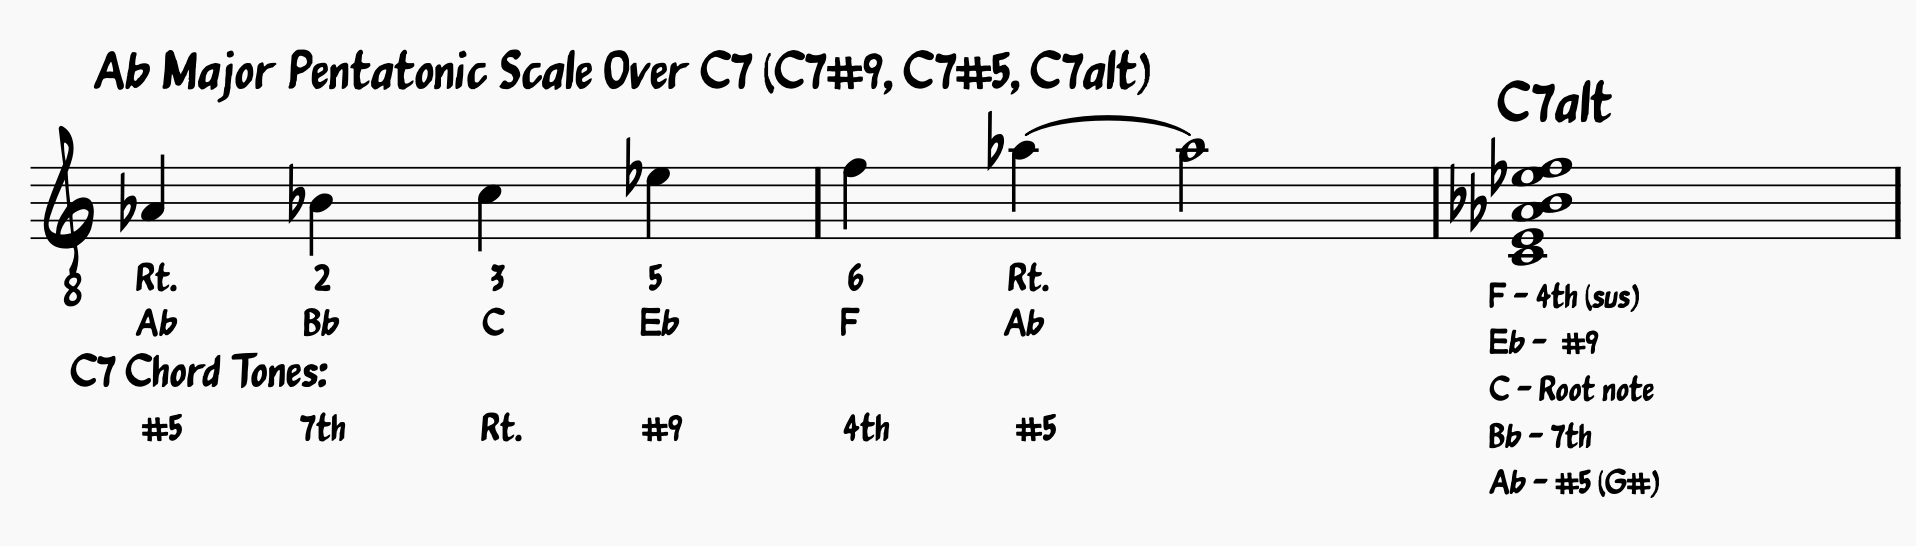 Blues Scale Guide: Ab Major Pentatonic Scale or Ab minor pentatonic scale over C7, C9, C13, C7sus Chords